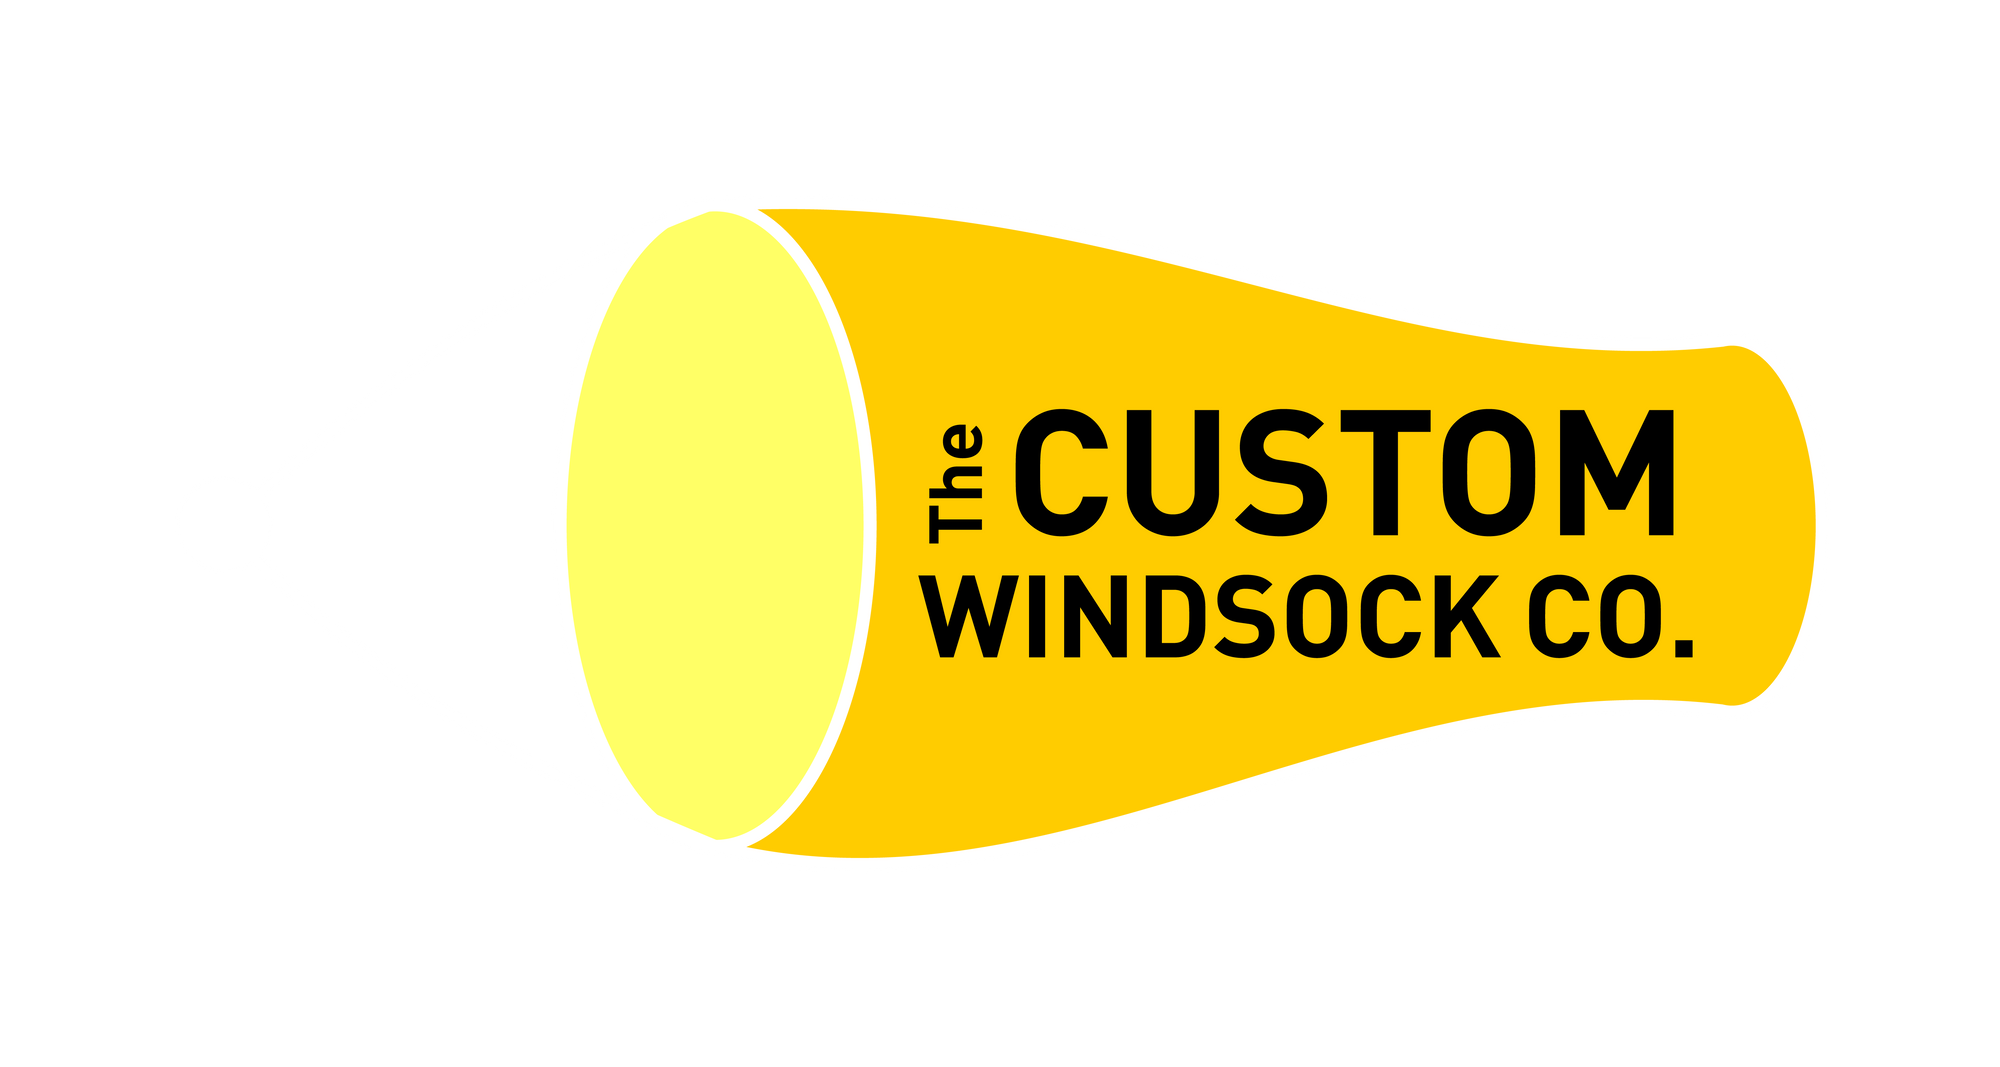 Custom Windsock company logo with white lines